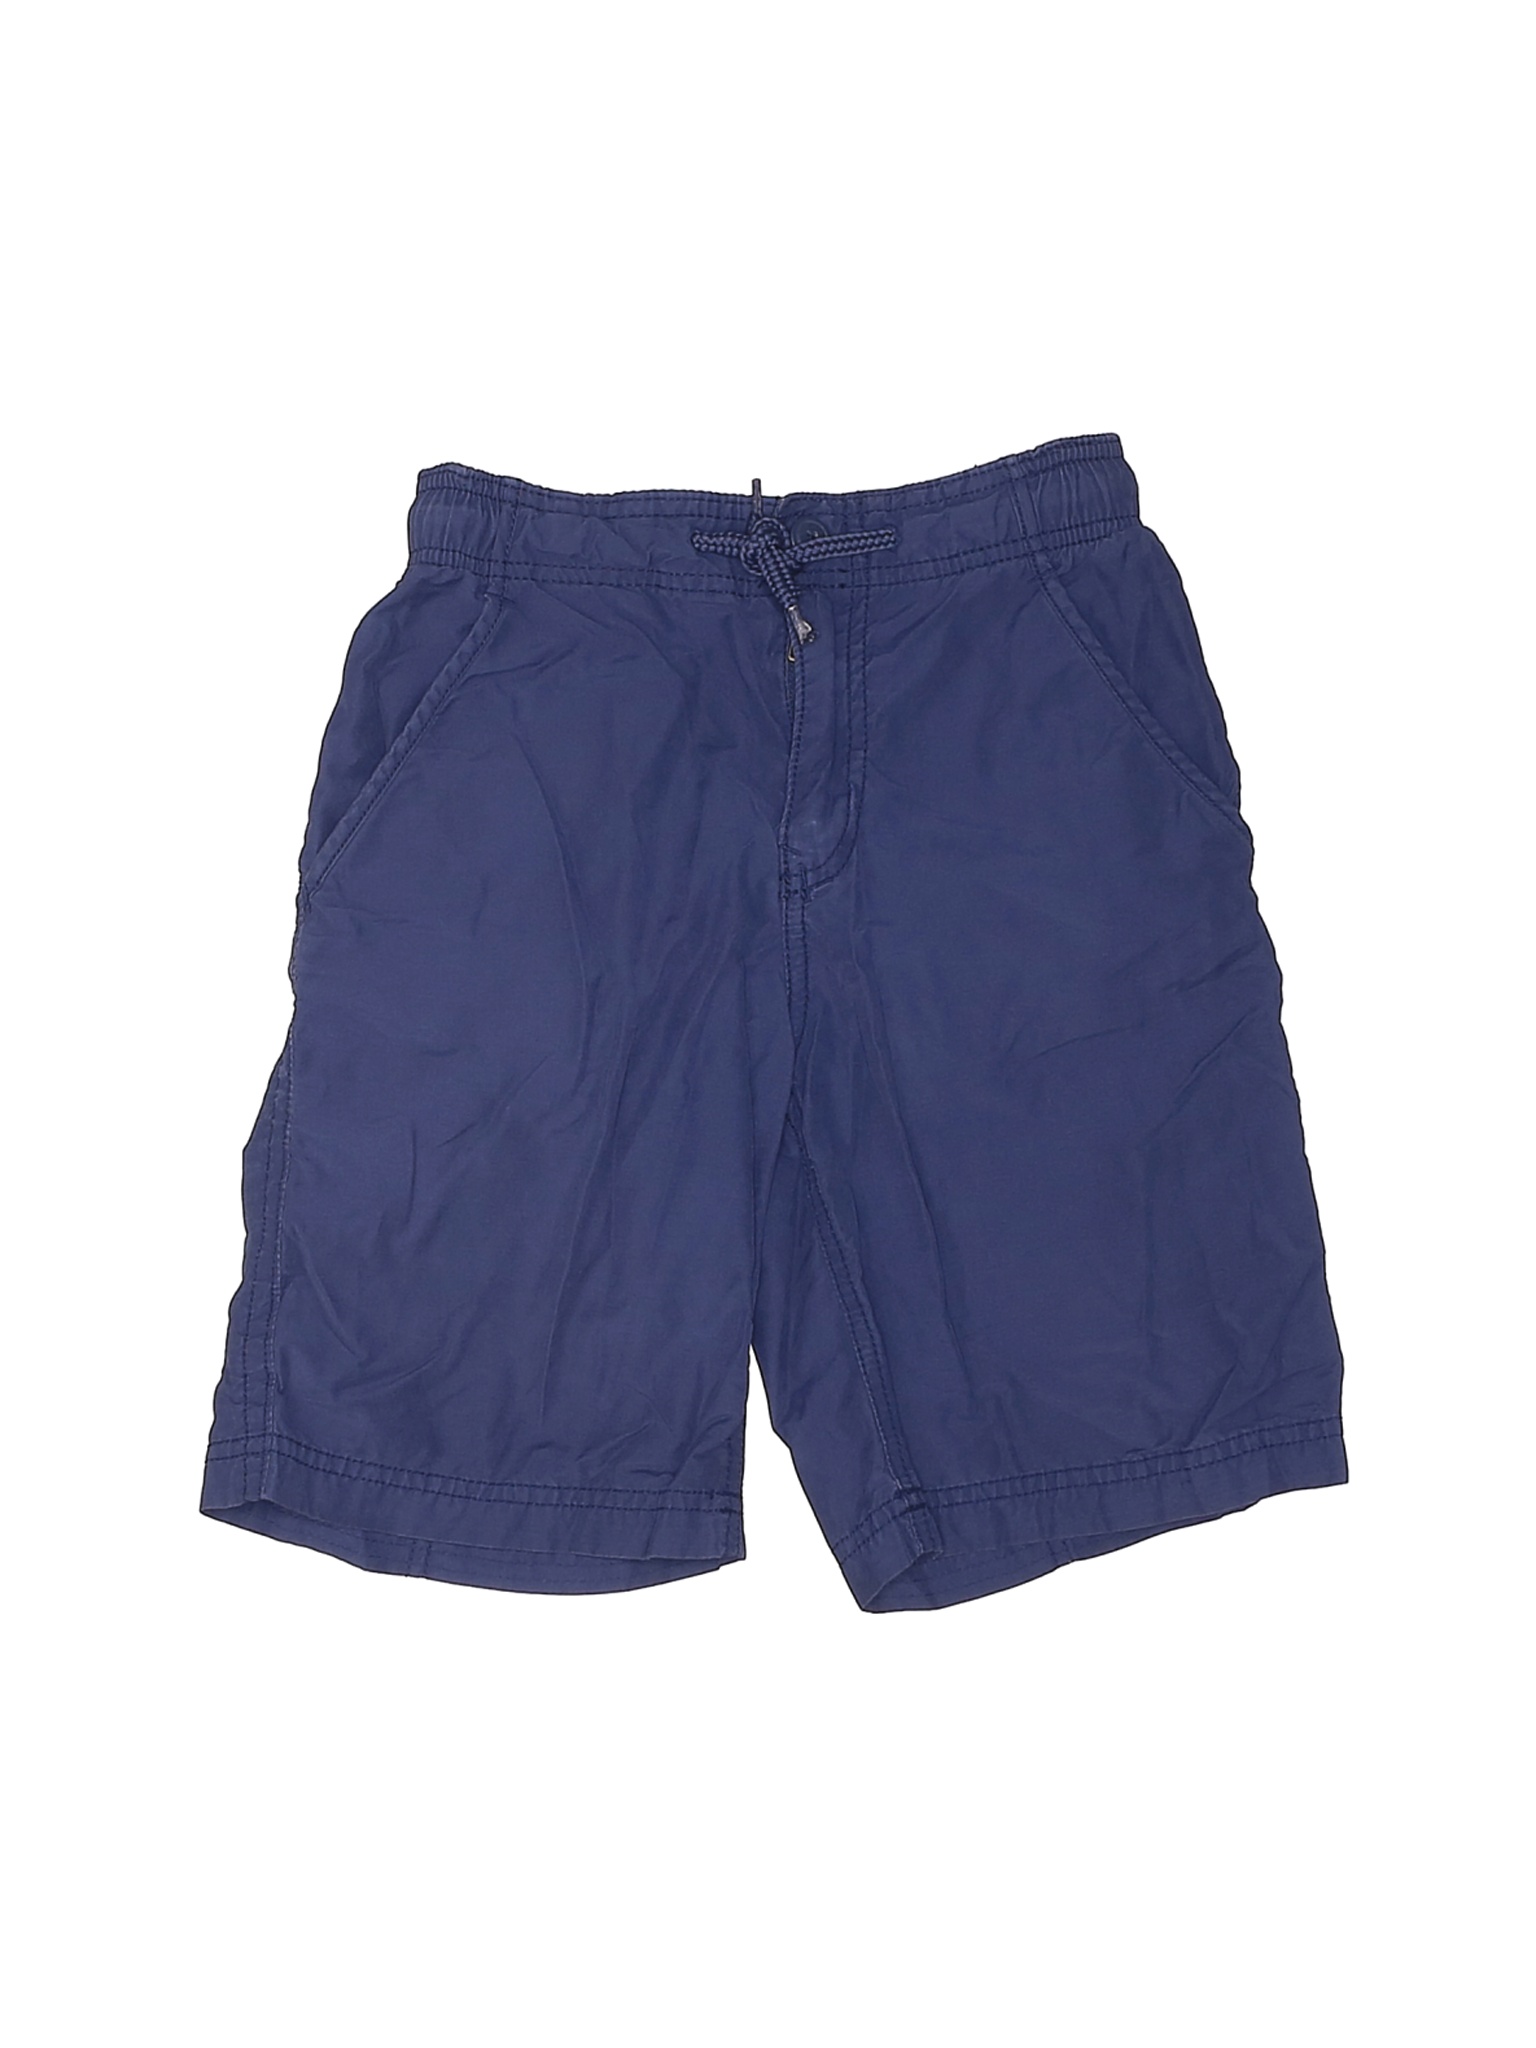 Gap Kids Boys Blue Shorts 8 | eBay